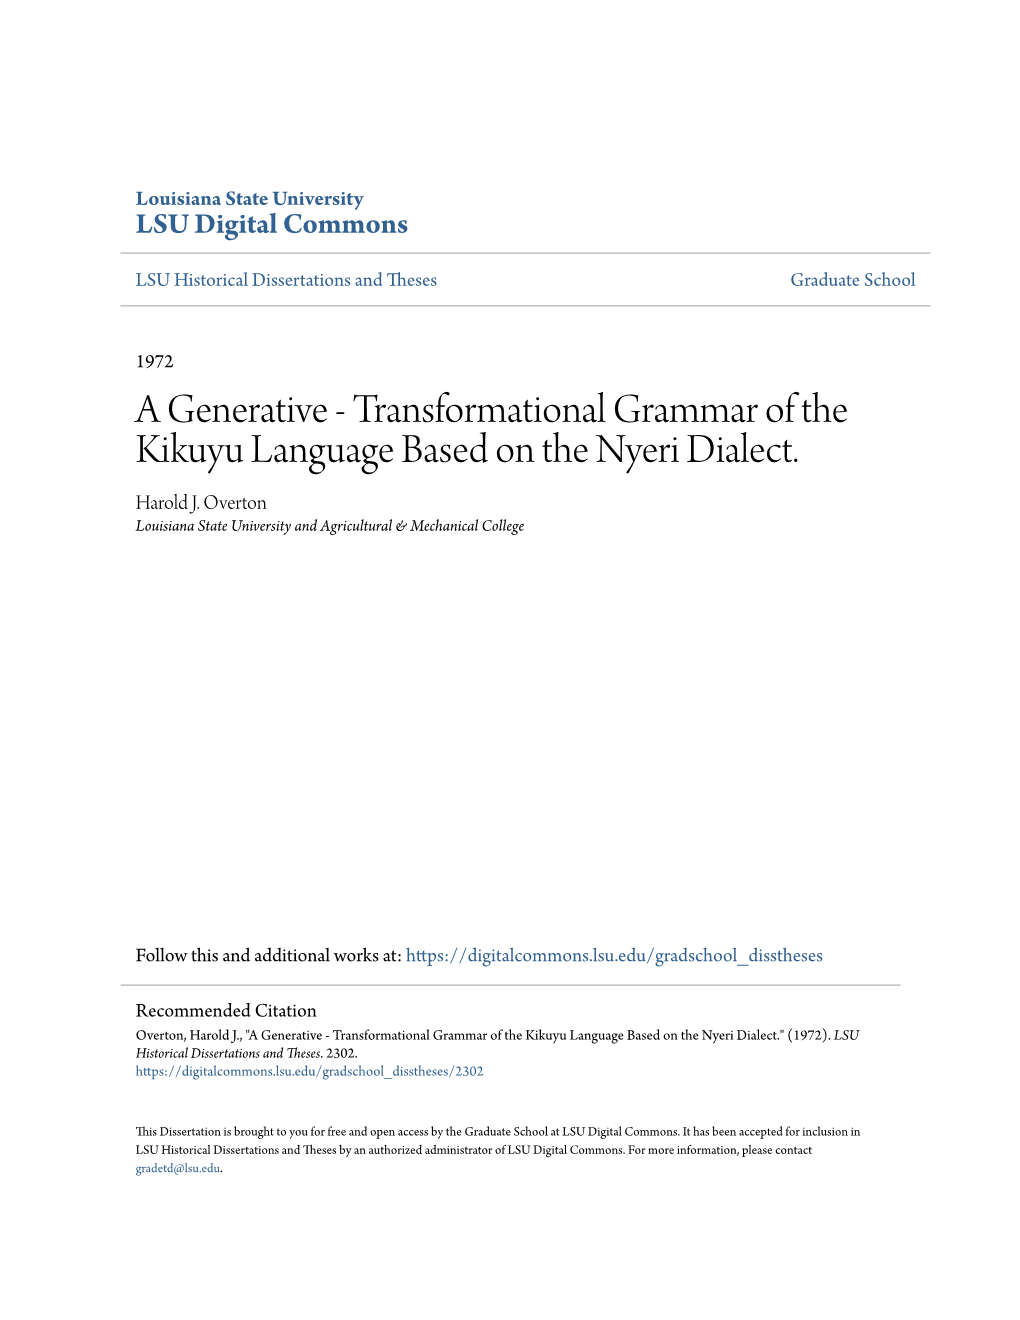 Transformational Grammar of the Kikuyu Language Based on the Nyeri Dialect